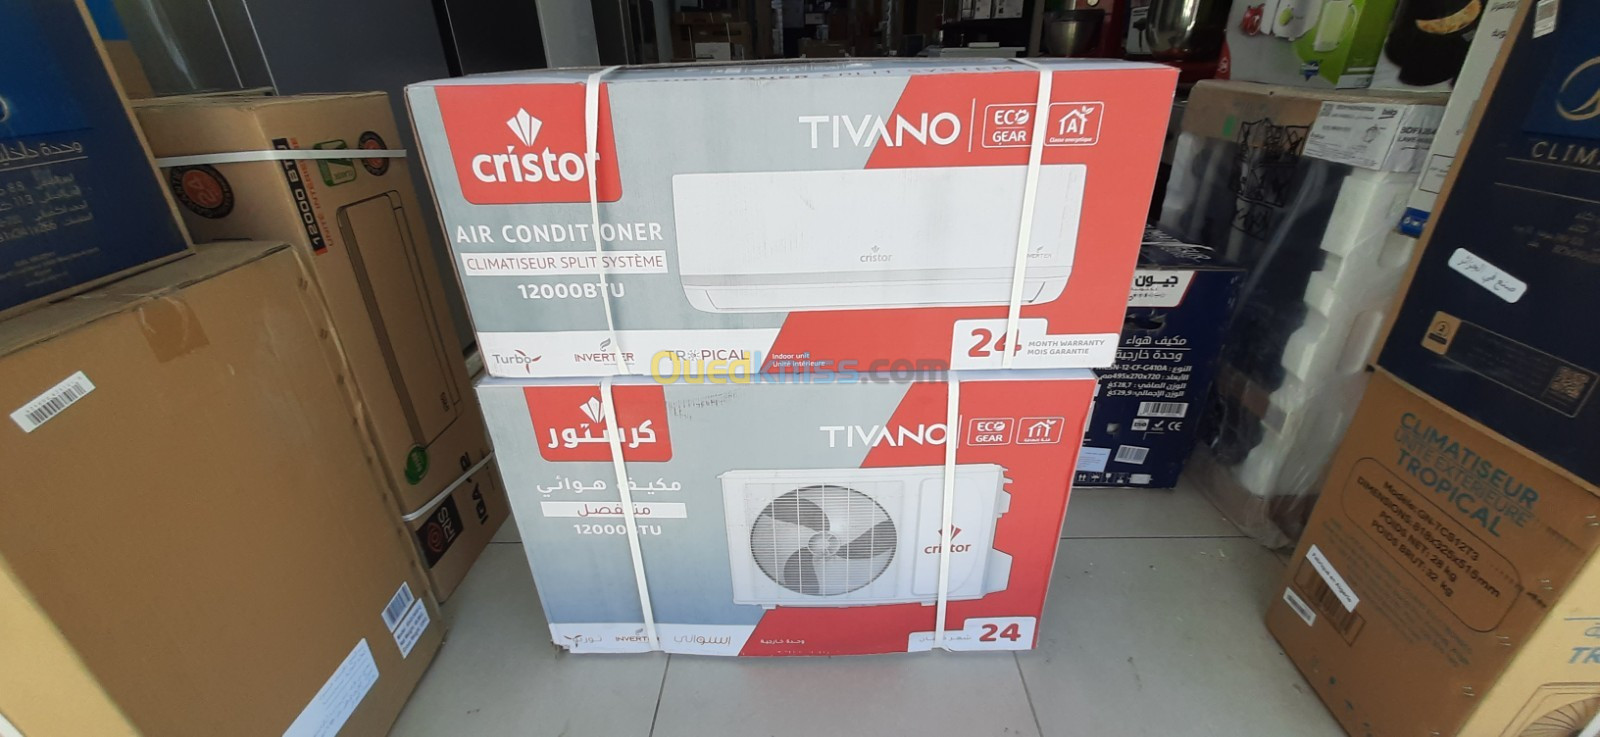 promotion climatiseur cristor 12000btu tivano inverter tropical T3